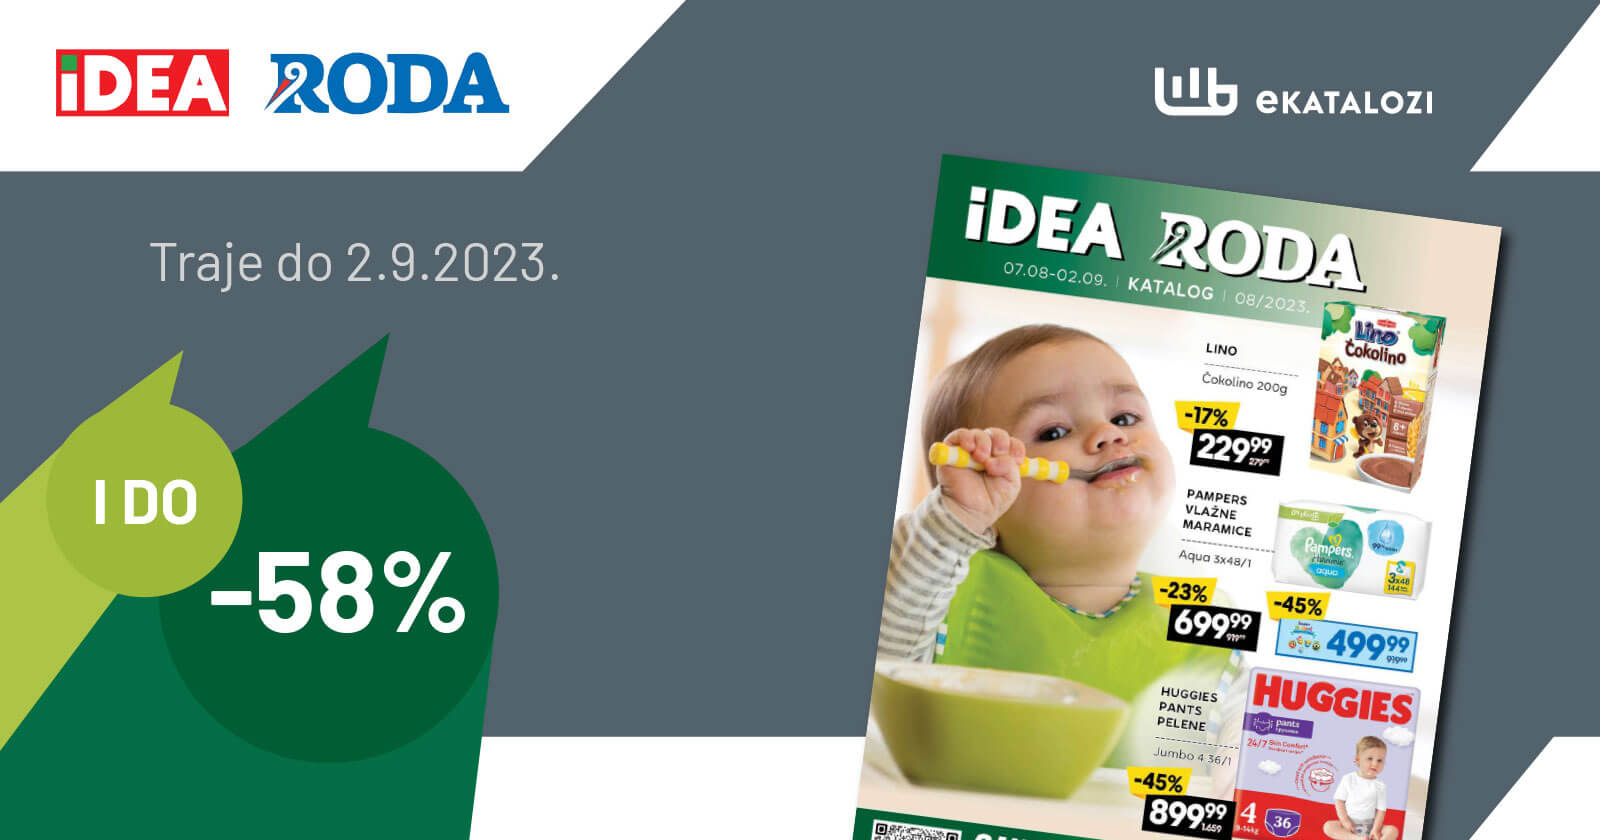 IDEA i RODA katalog AVGUST i SEPTEMBAR 2023. Akcija traje od 7.8. do 2.9.2023.